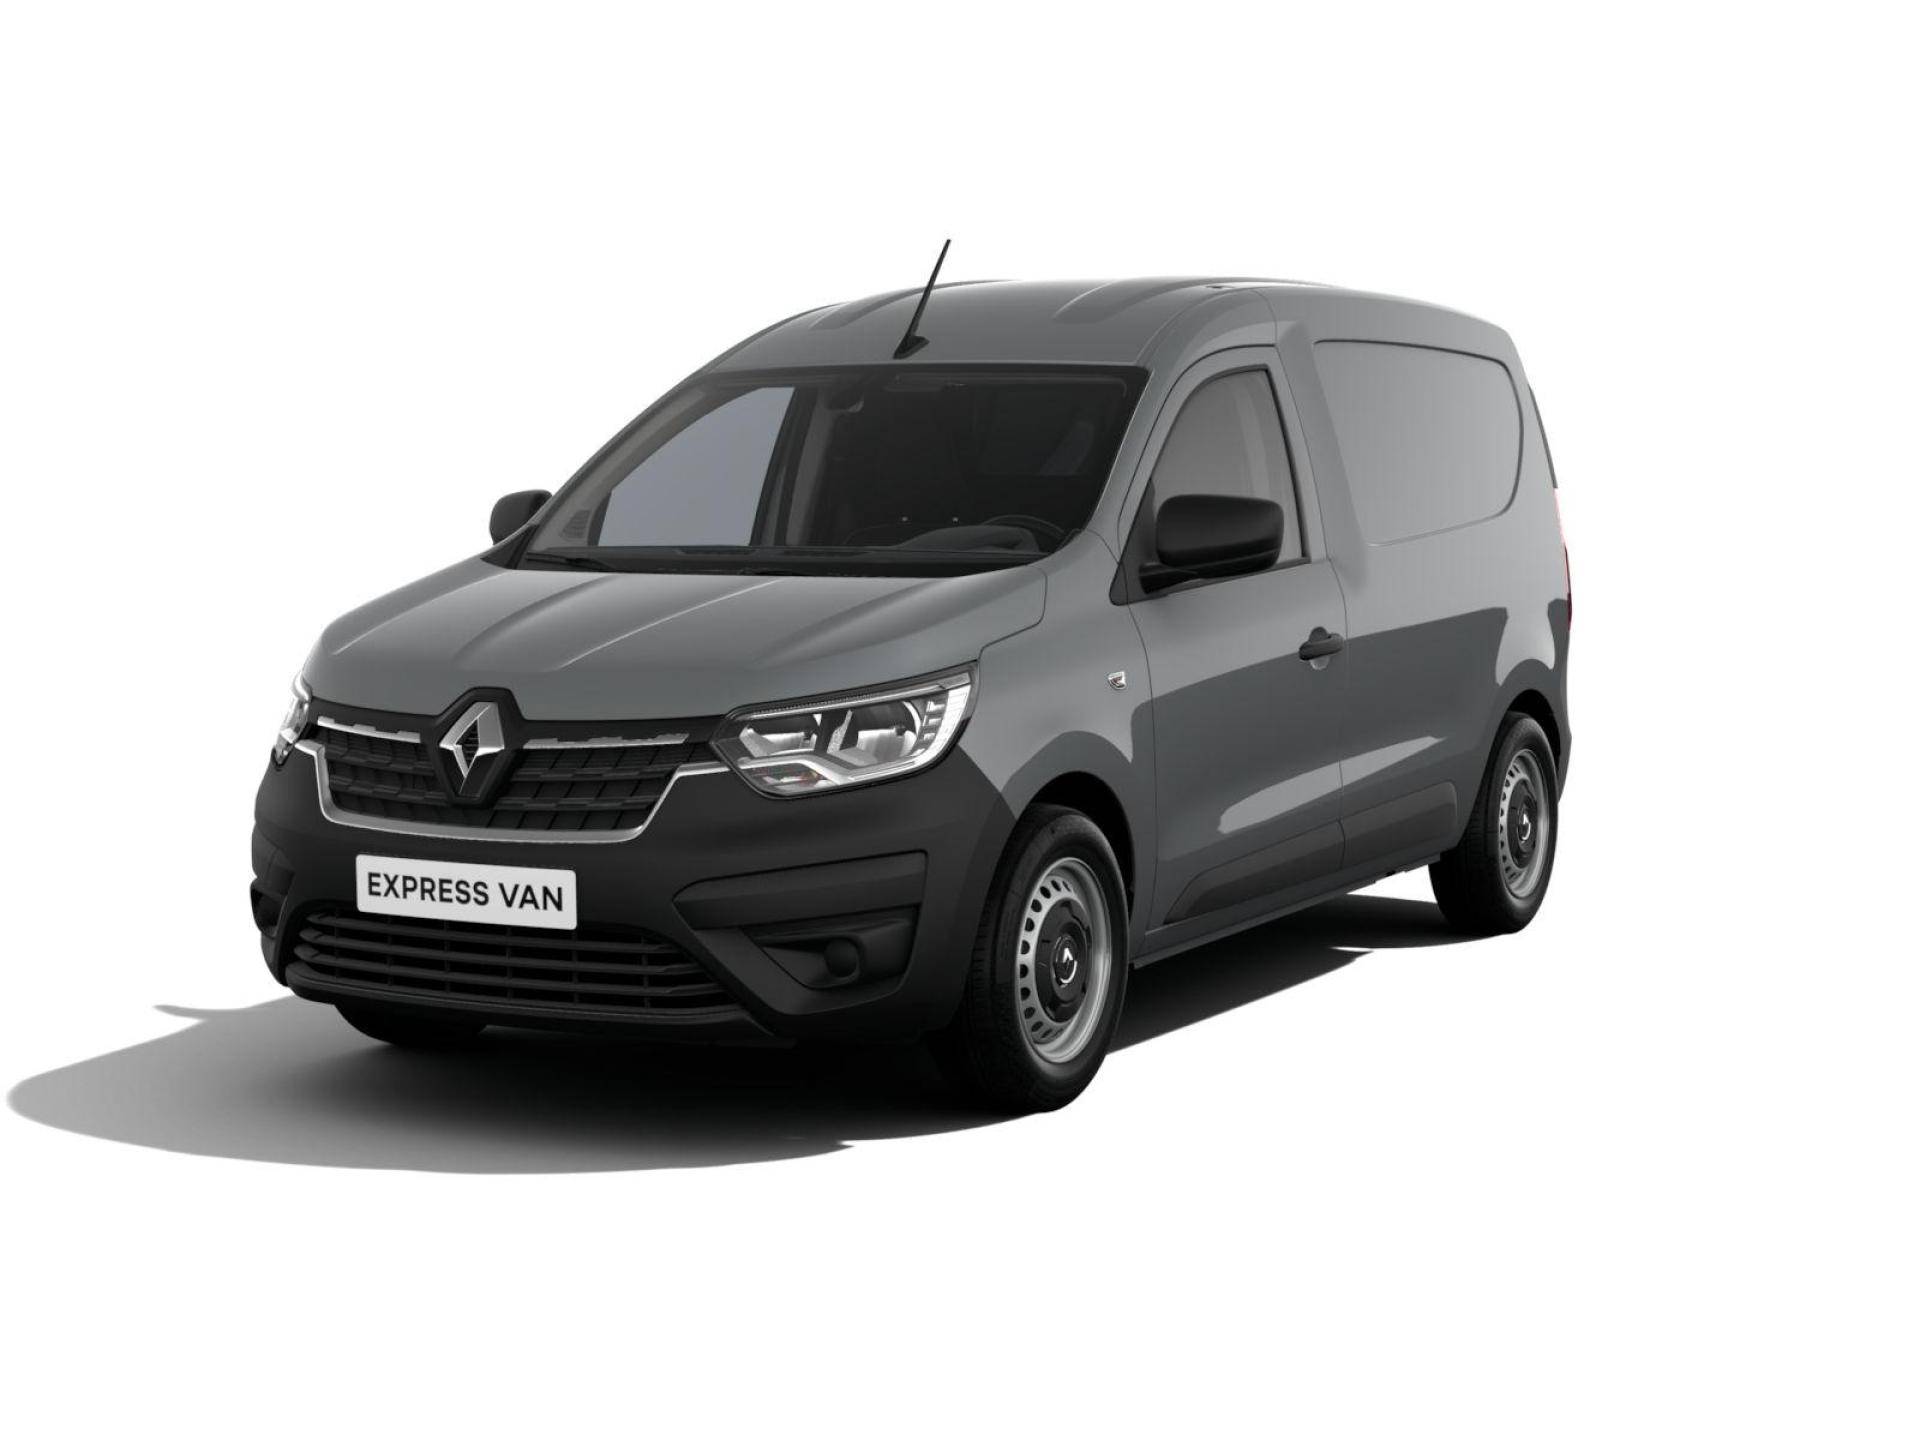 Renault NUOVO EXPRESS VAN